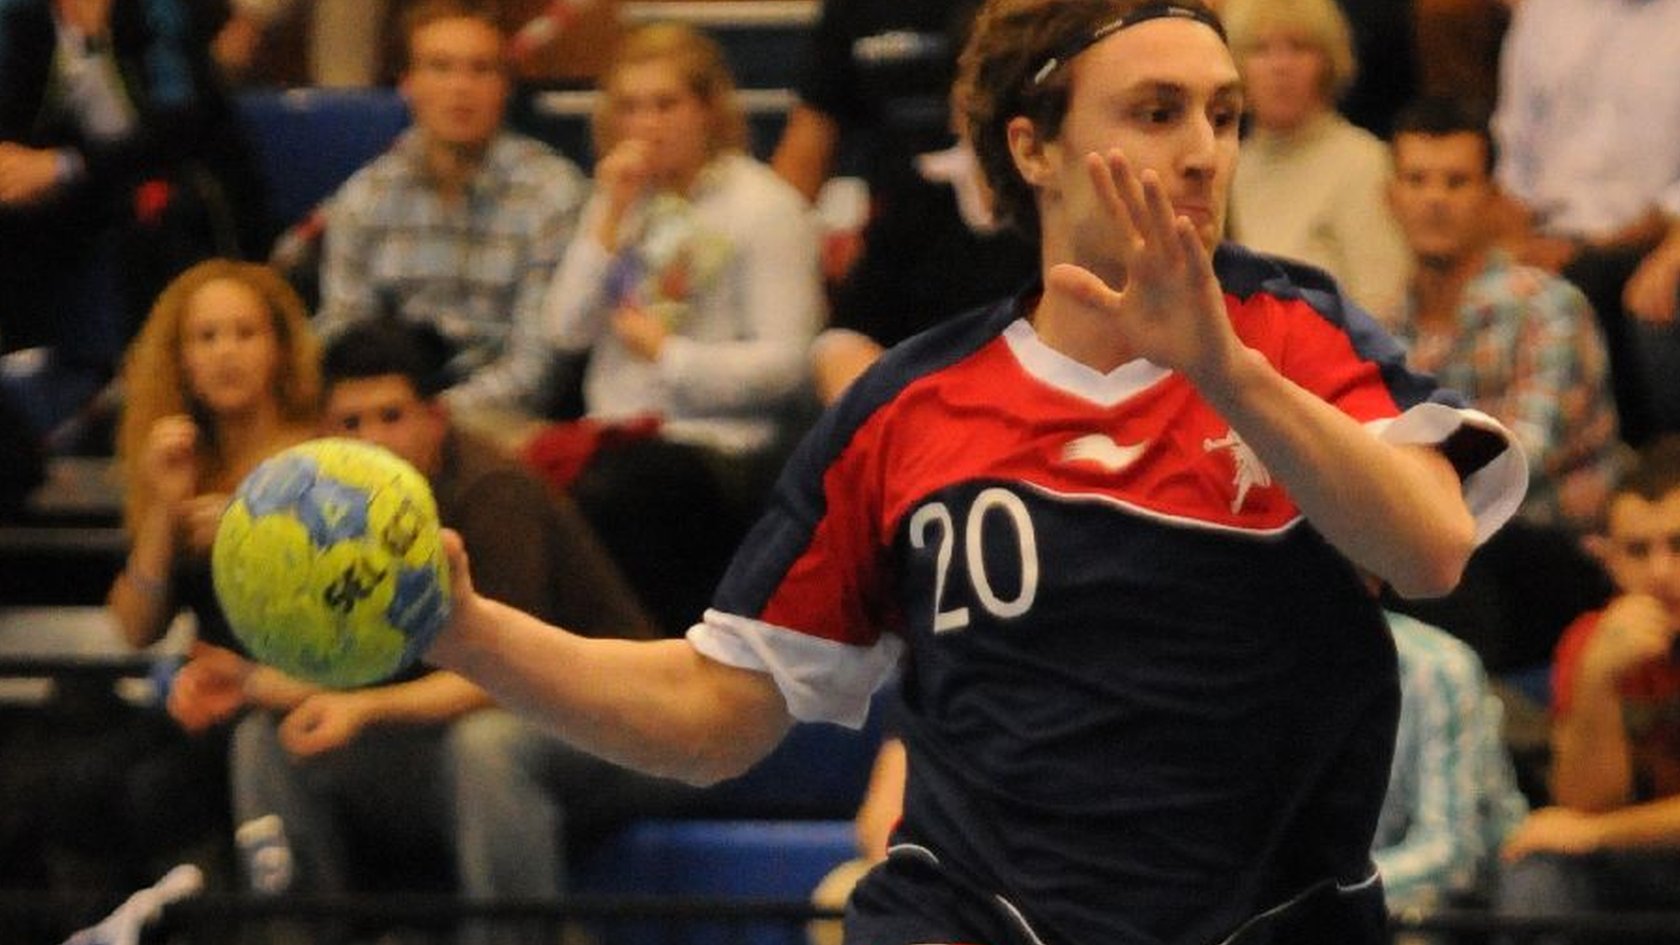 Handball: Great Britain fall at IHF Emerging Nations group stage